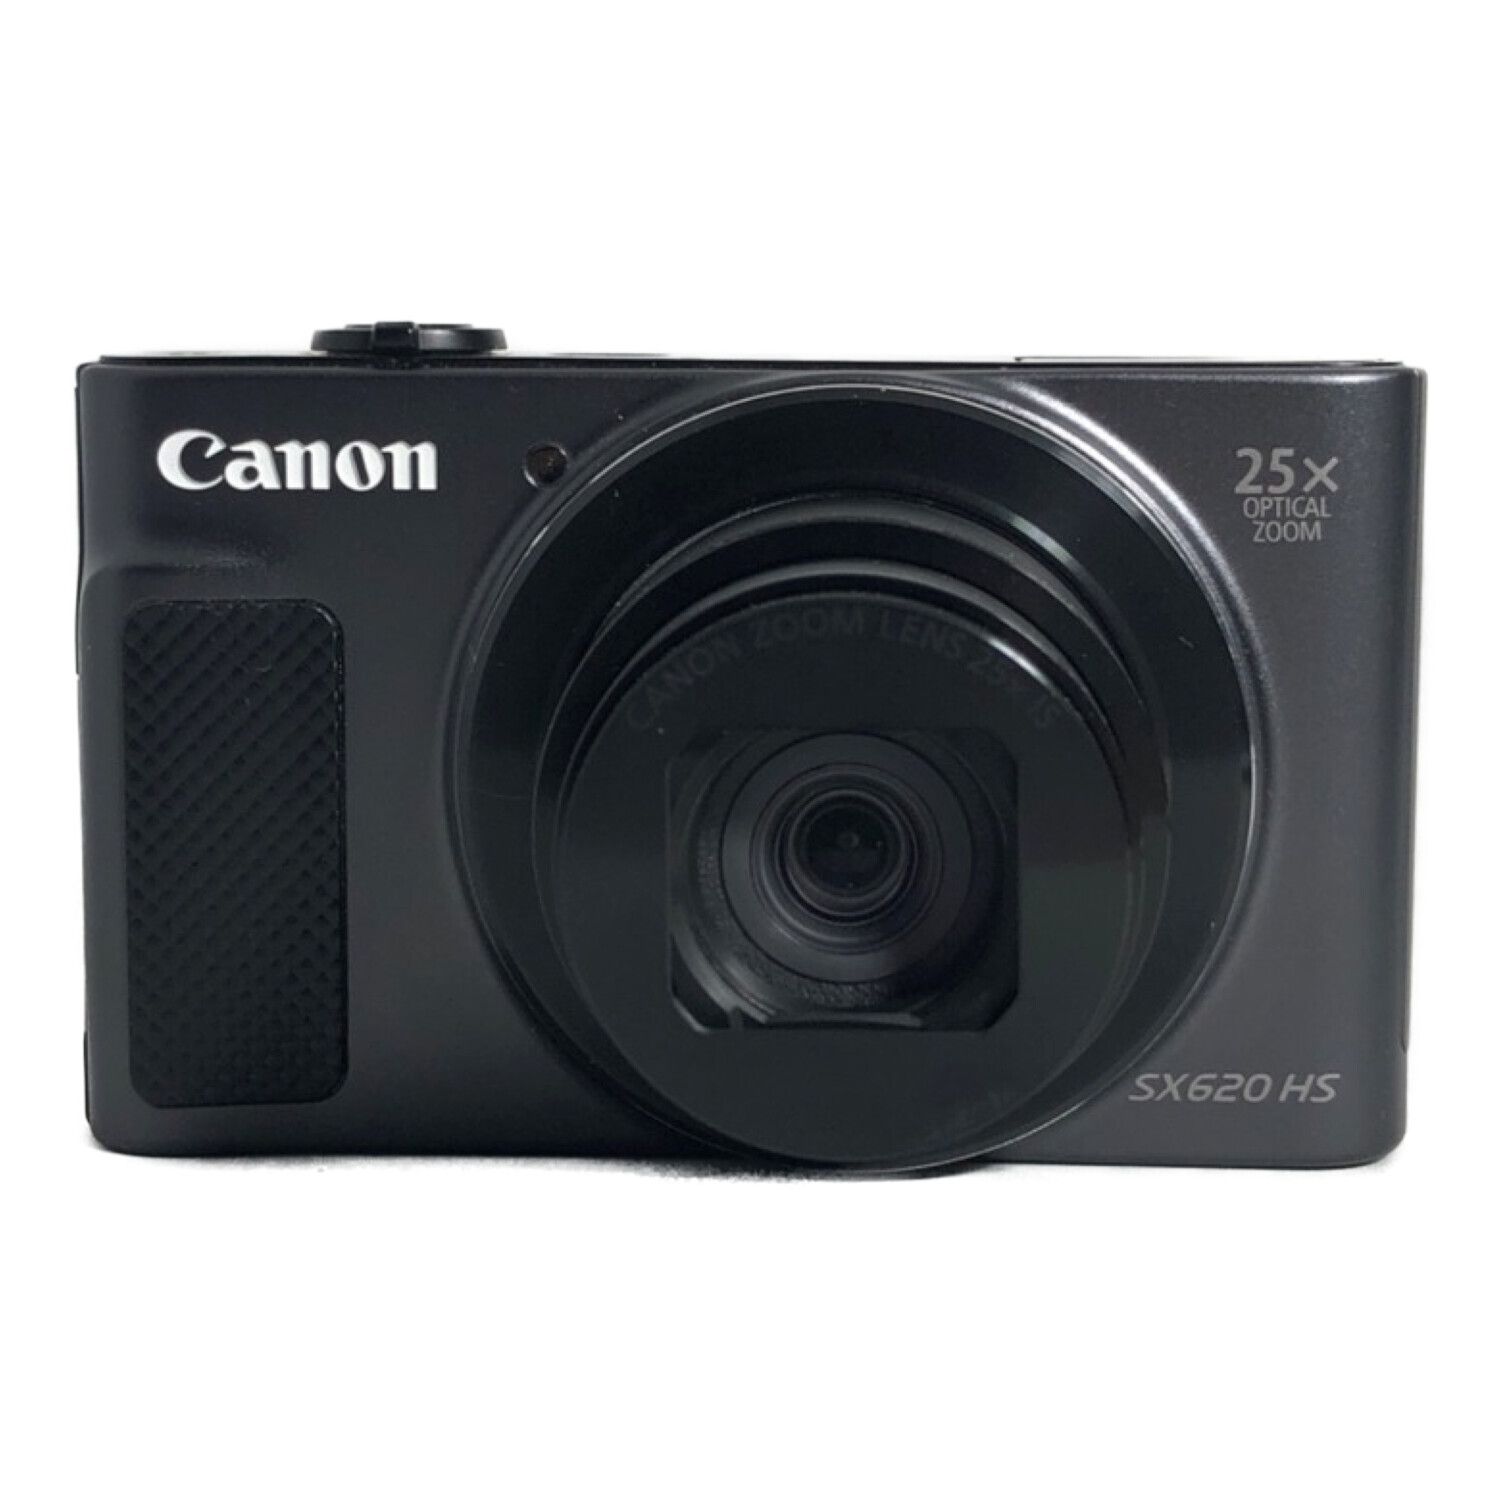 Canon Powershot SX620 HS《光学25倍ズーム搭載》